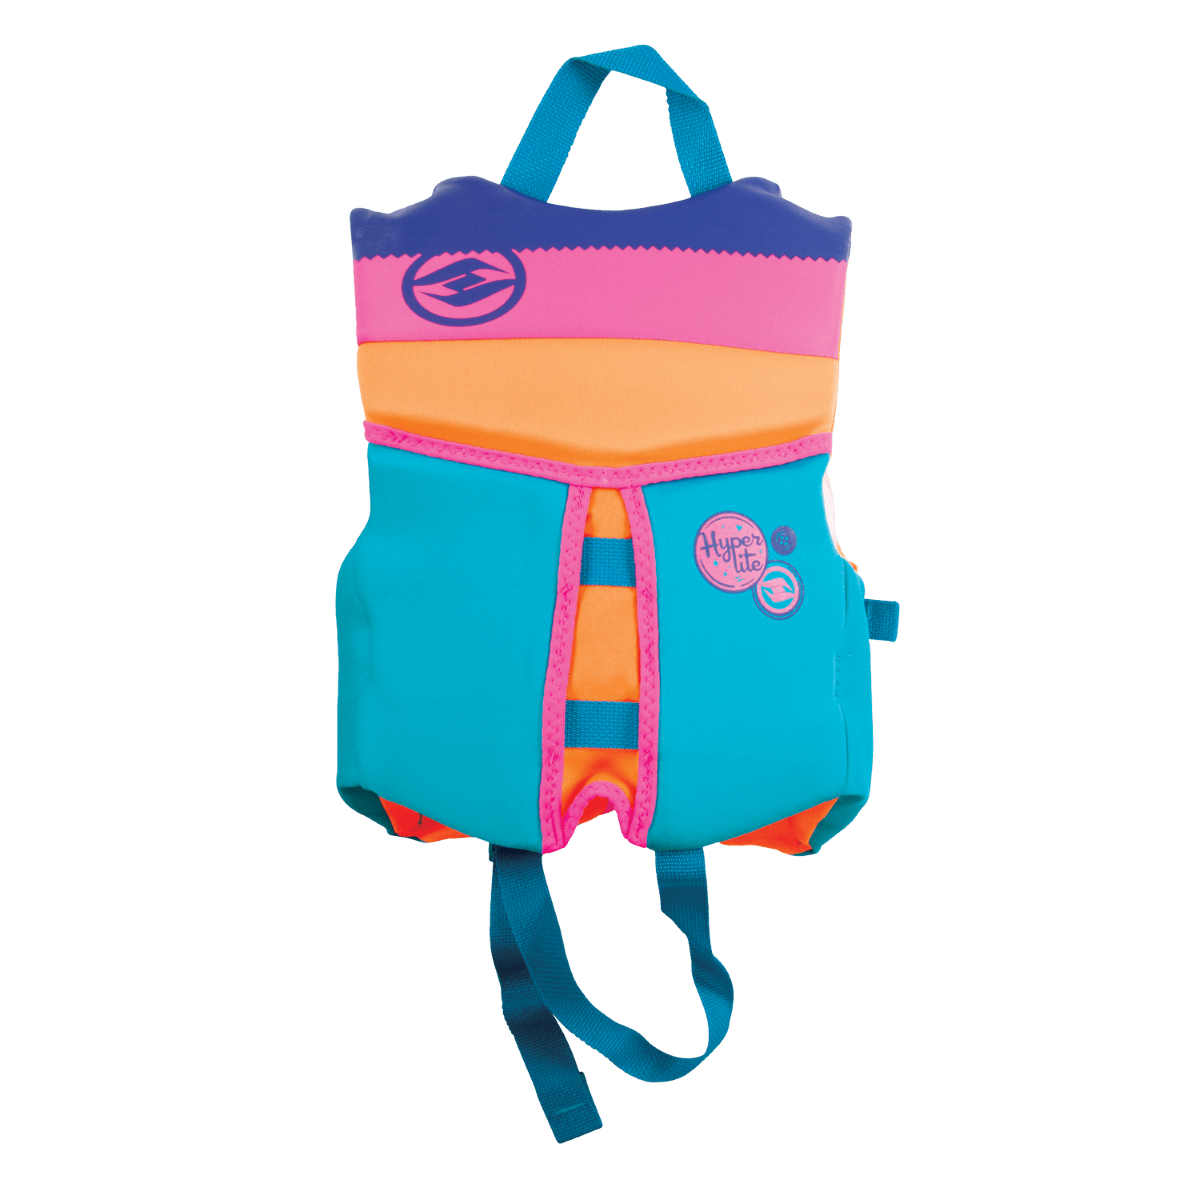 Hyperlite Girls Indy CGA Life Jacket in Aqua / Pink / Orange - BoardCo